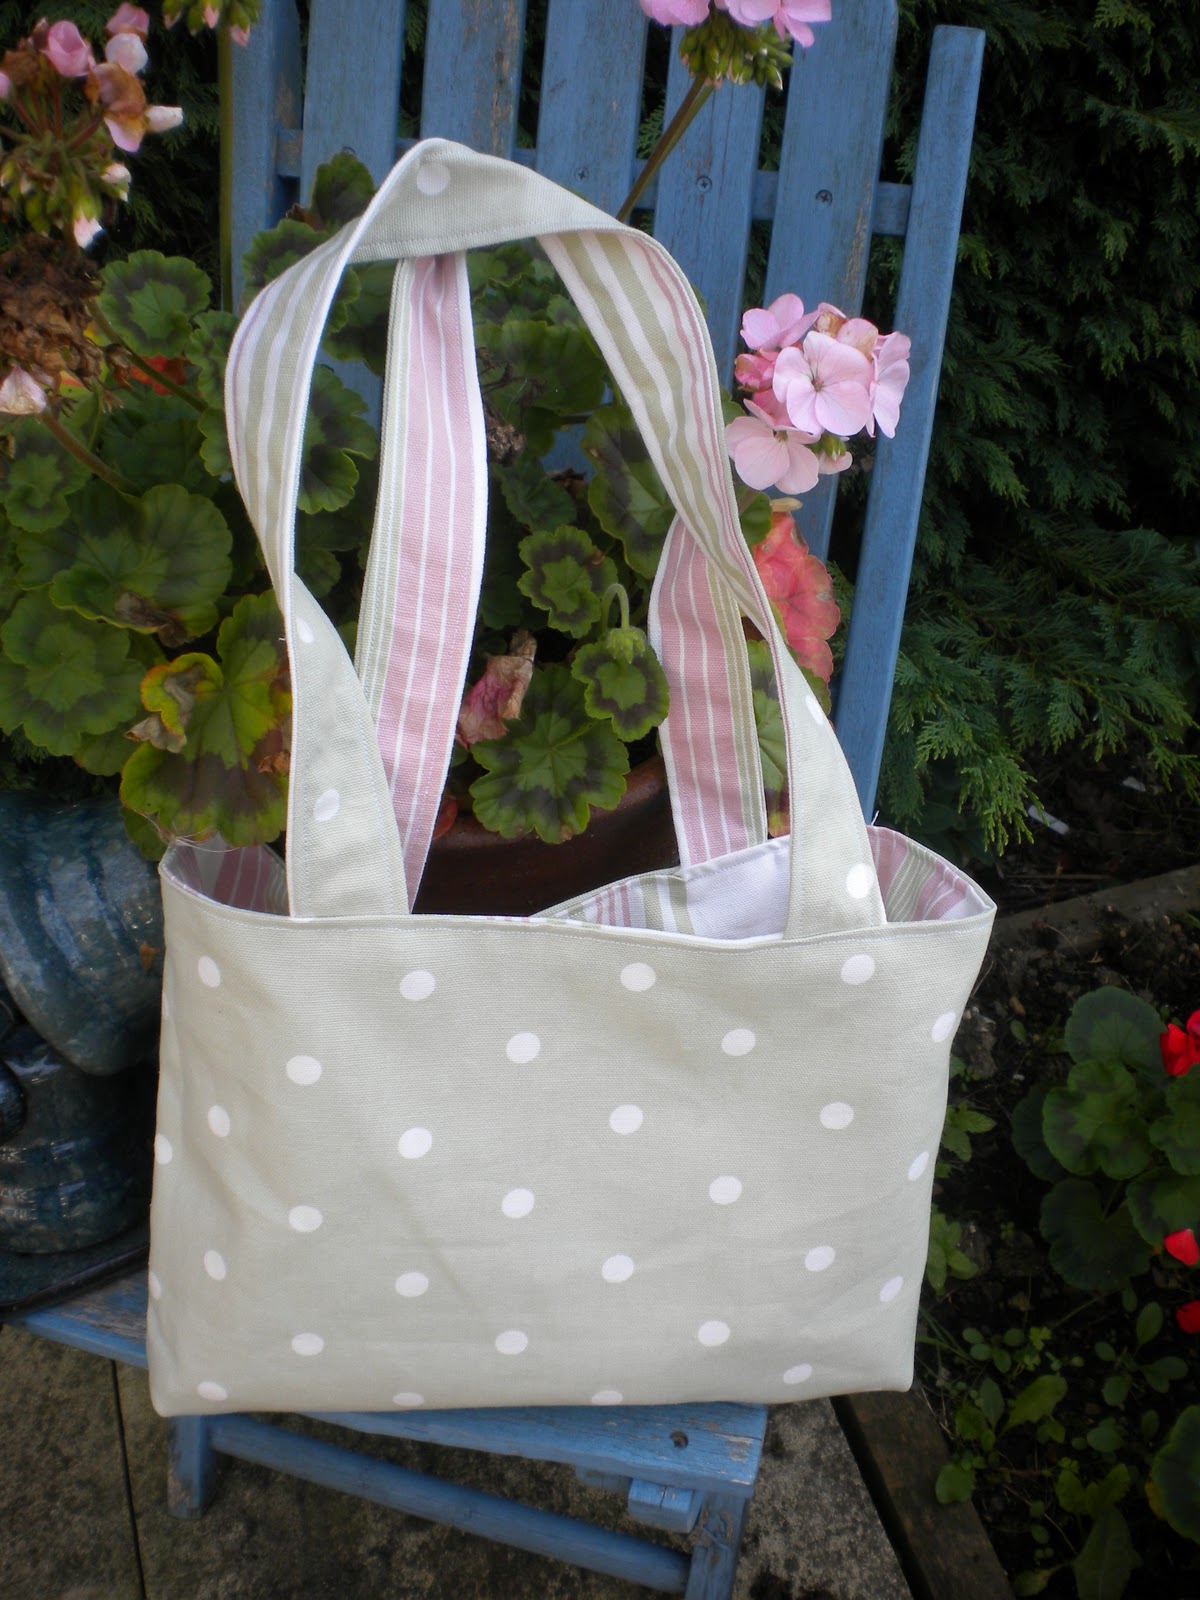 Sew Happy Crafting: Reversible Tote Bag Tutorial